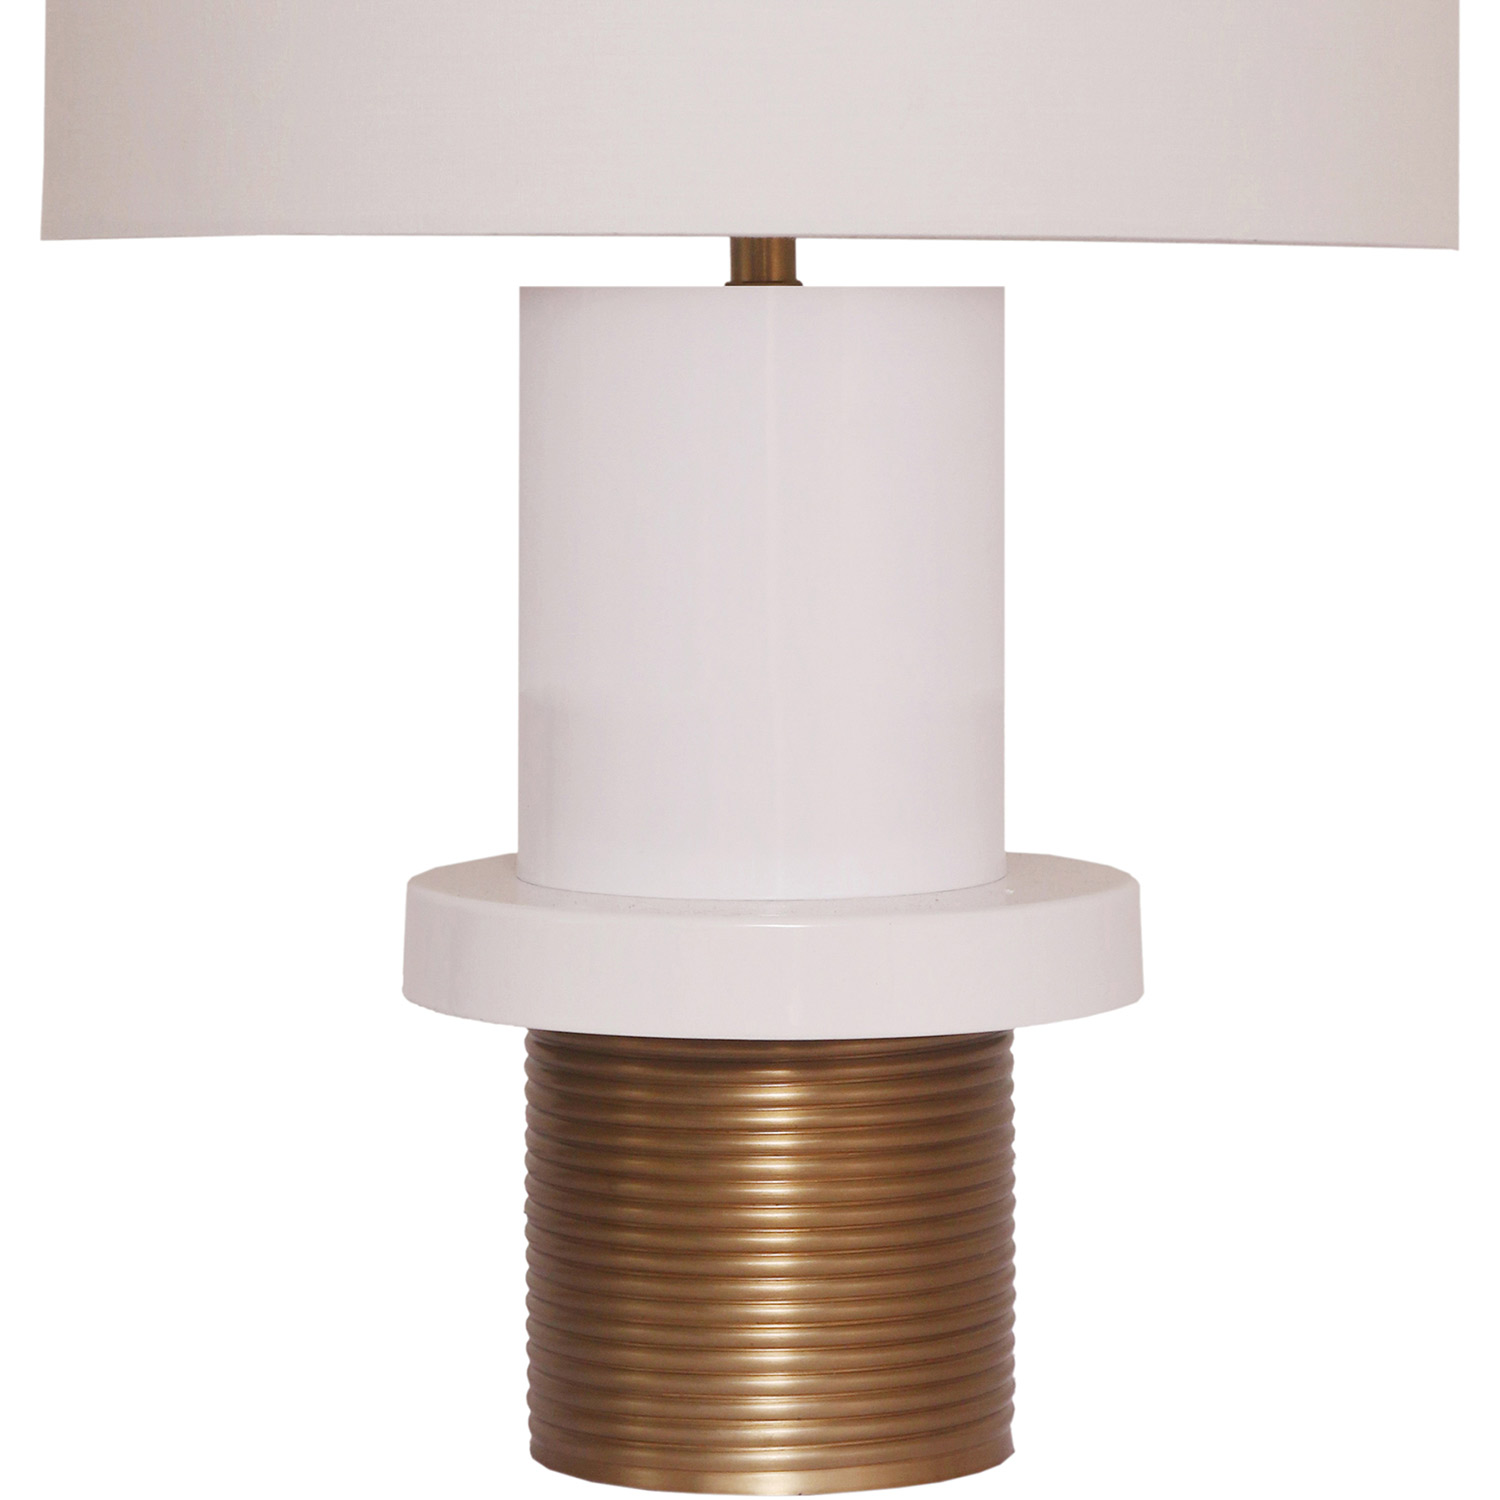 Ren-Wil Monique Table Lamp - White/Gold